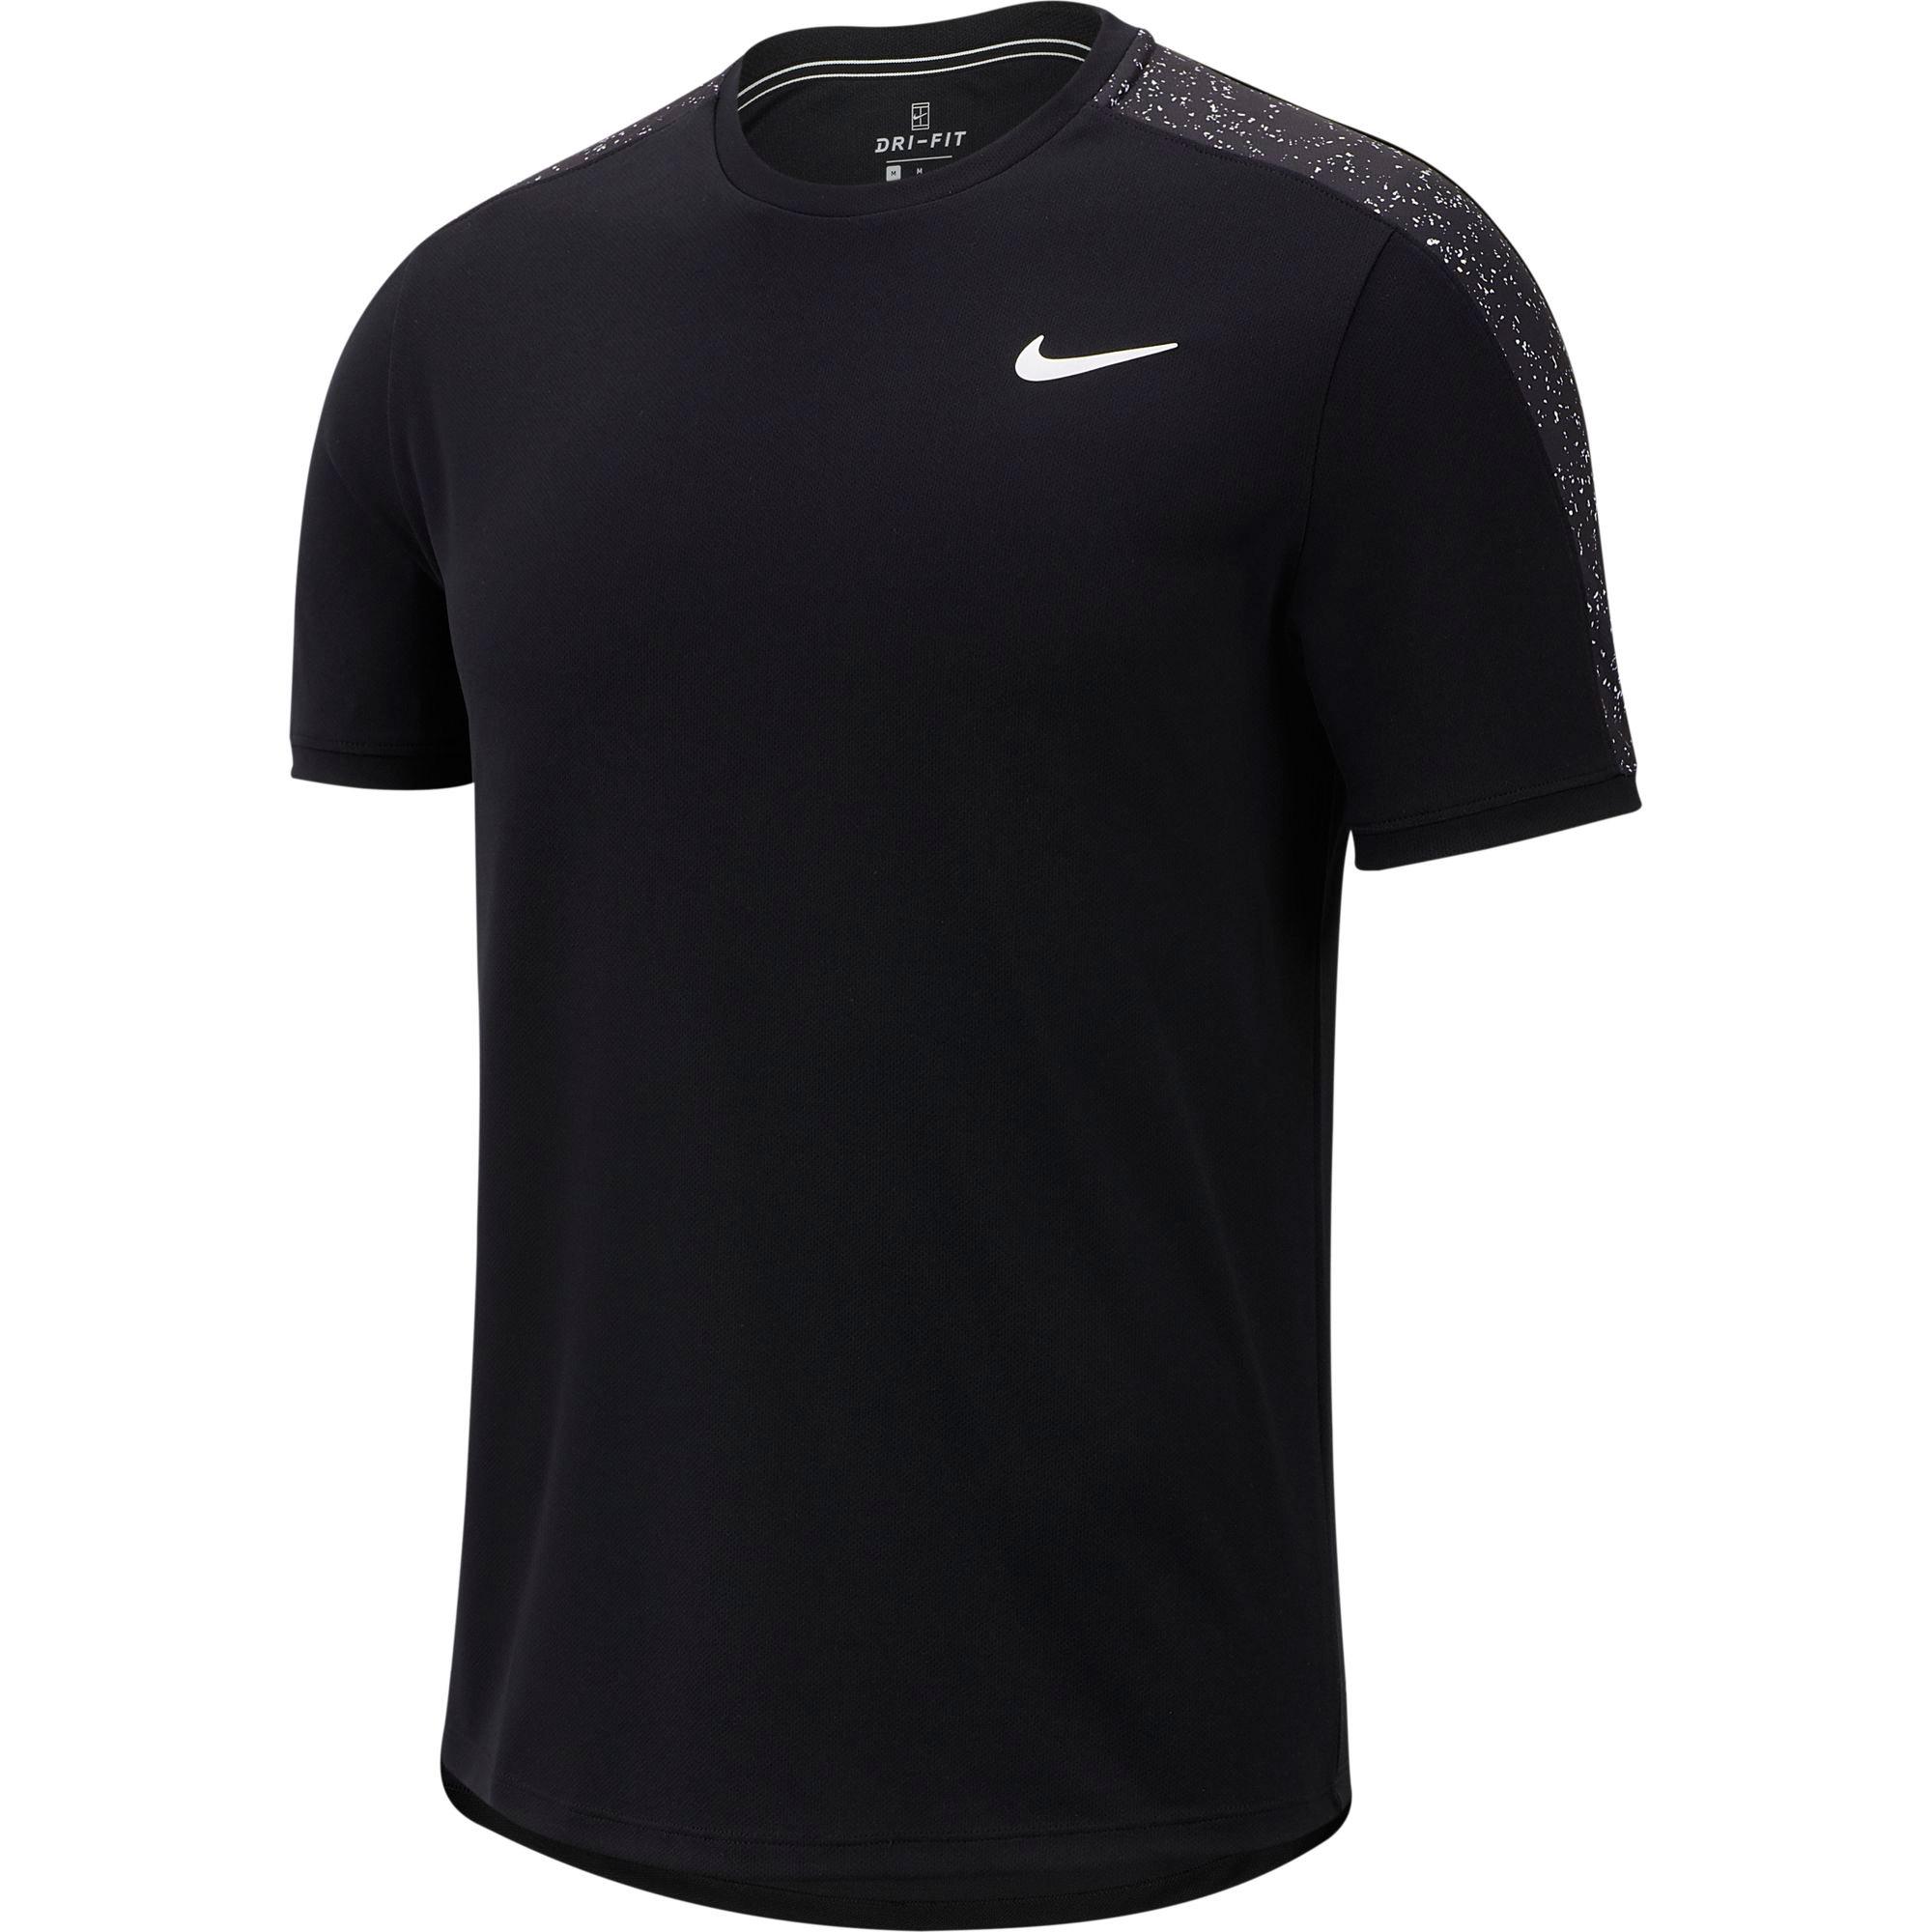 Nike Mens Dri-FIT Graphic Tennis Top - Black - Tennisnuts.com